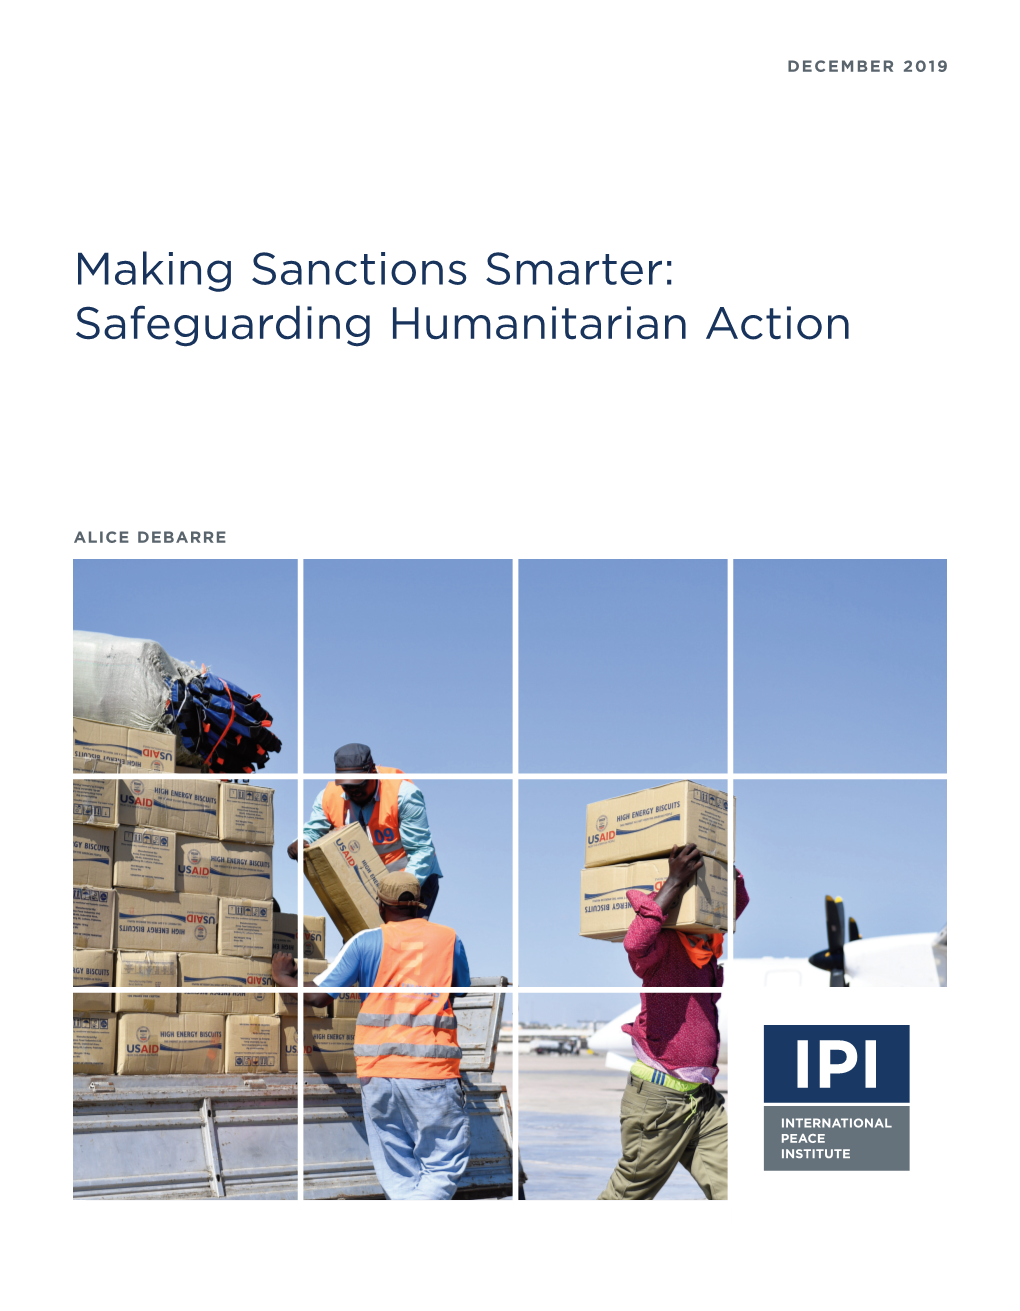 Making Sanctions Smarter: Safeguarding Humanitarian Action